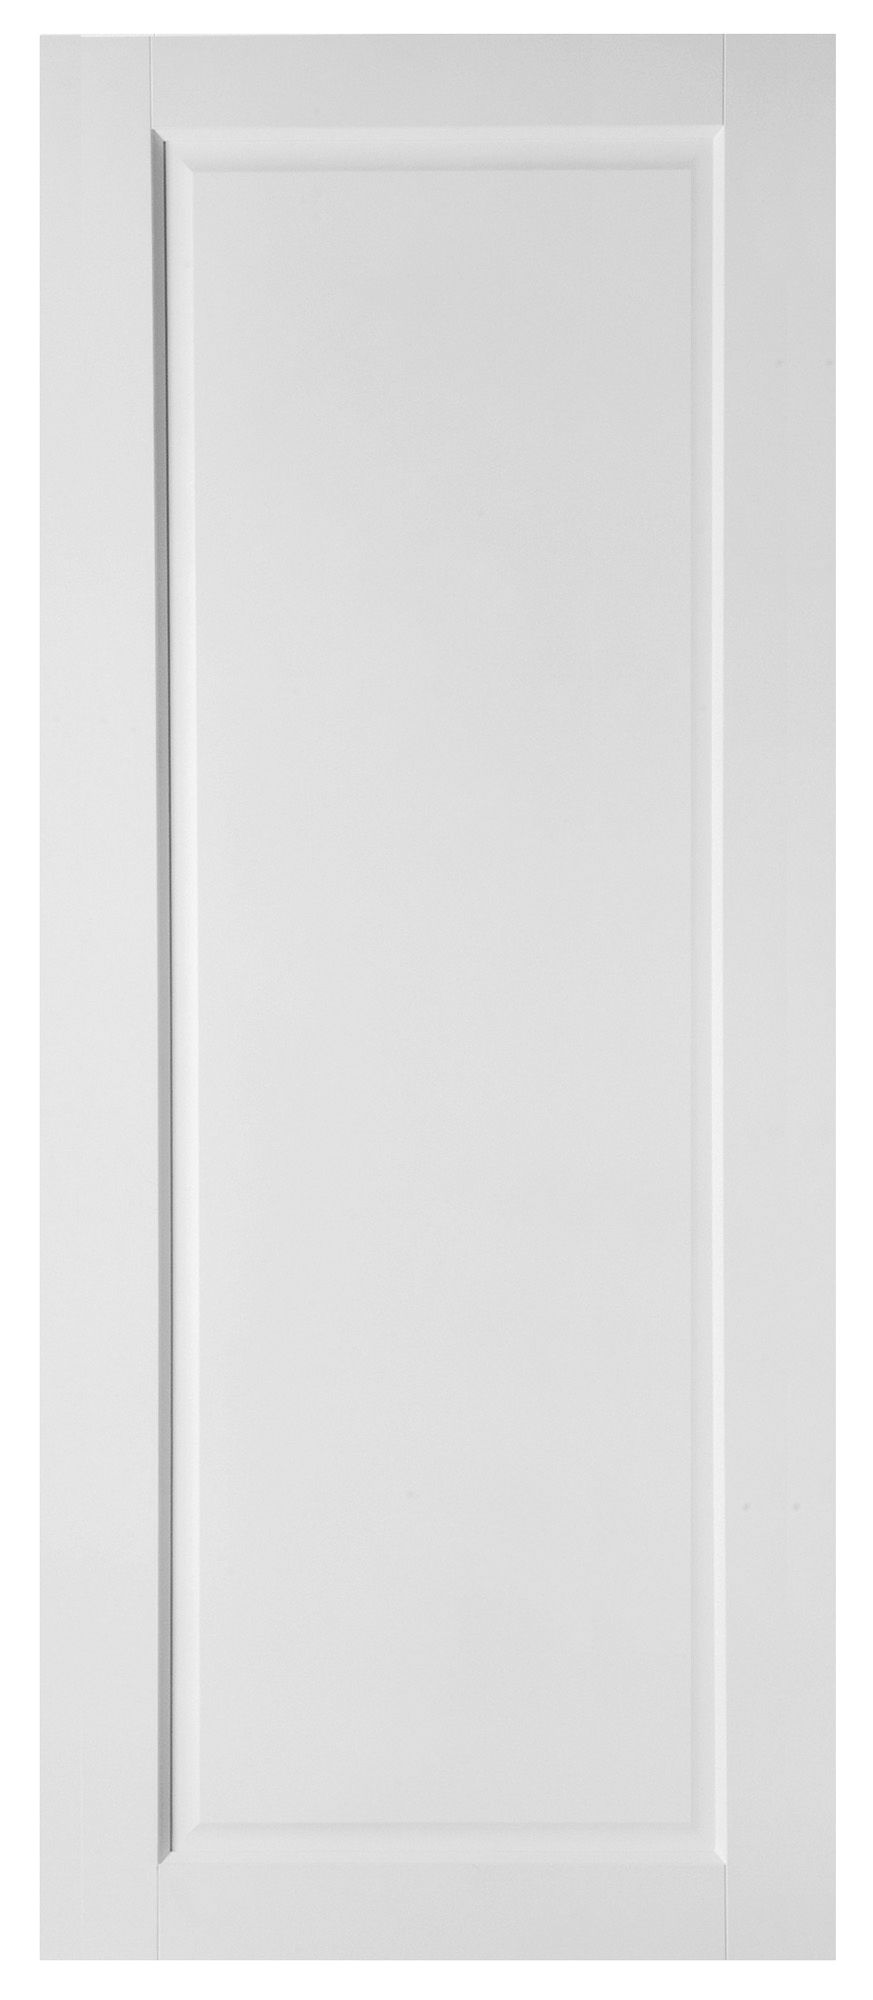 1 panel Unglazed Shaker White Internal Door, (H)1981mm (W)762mm (T)35mm